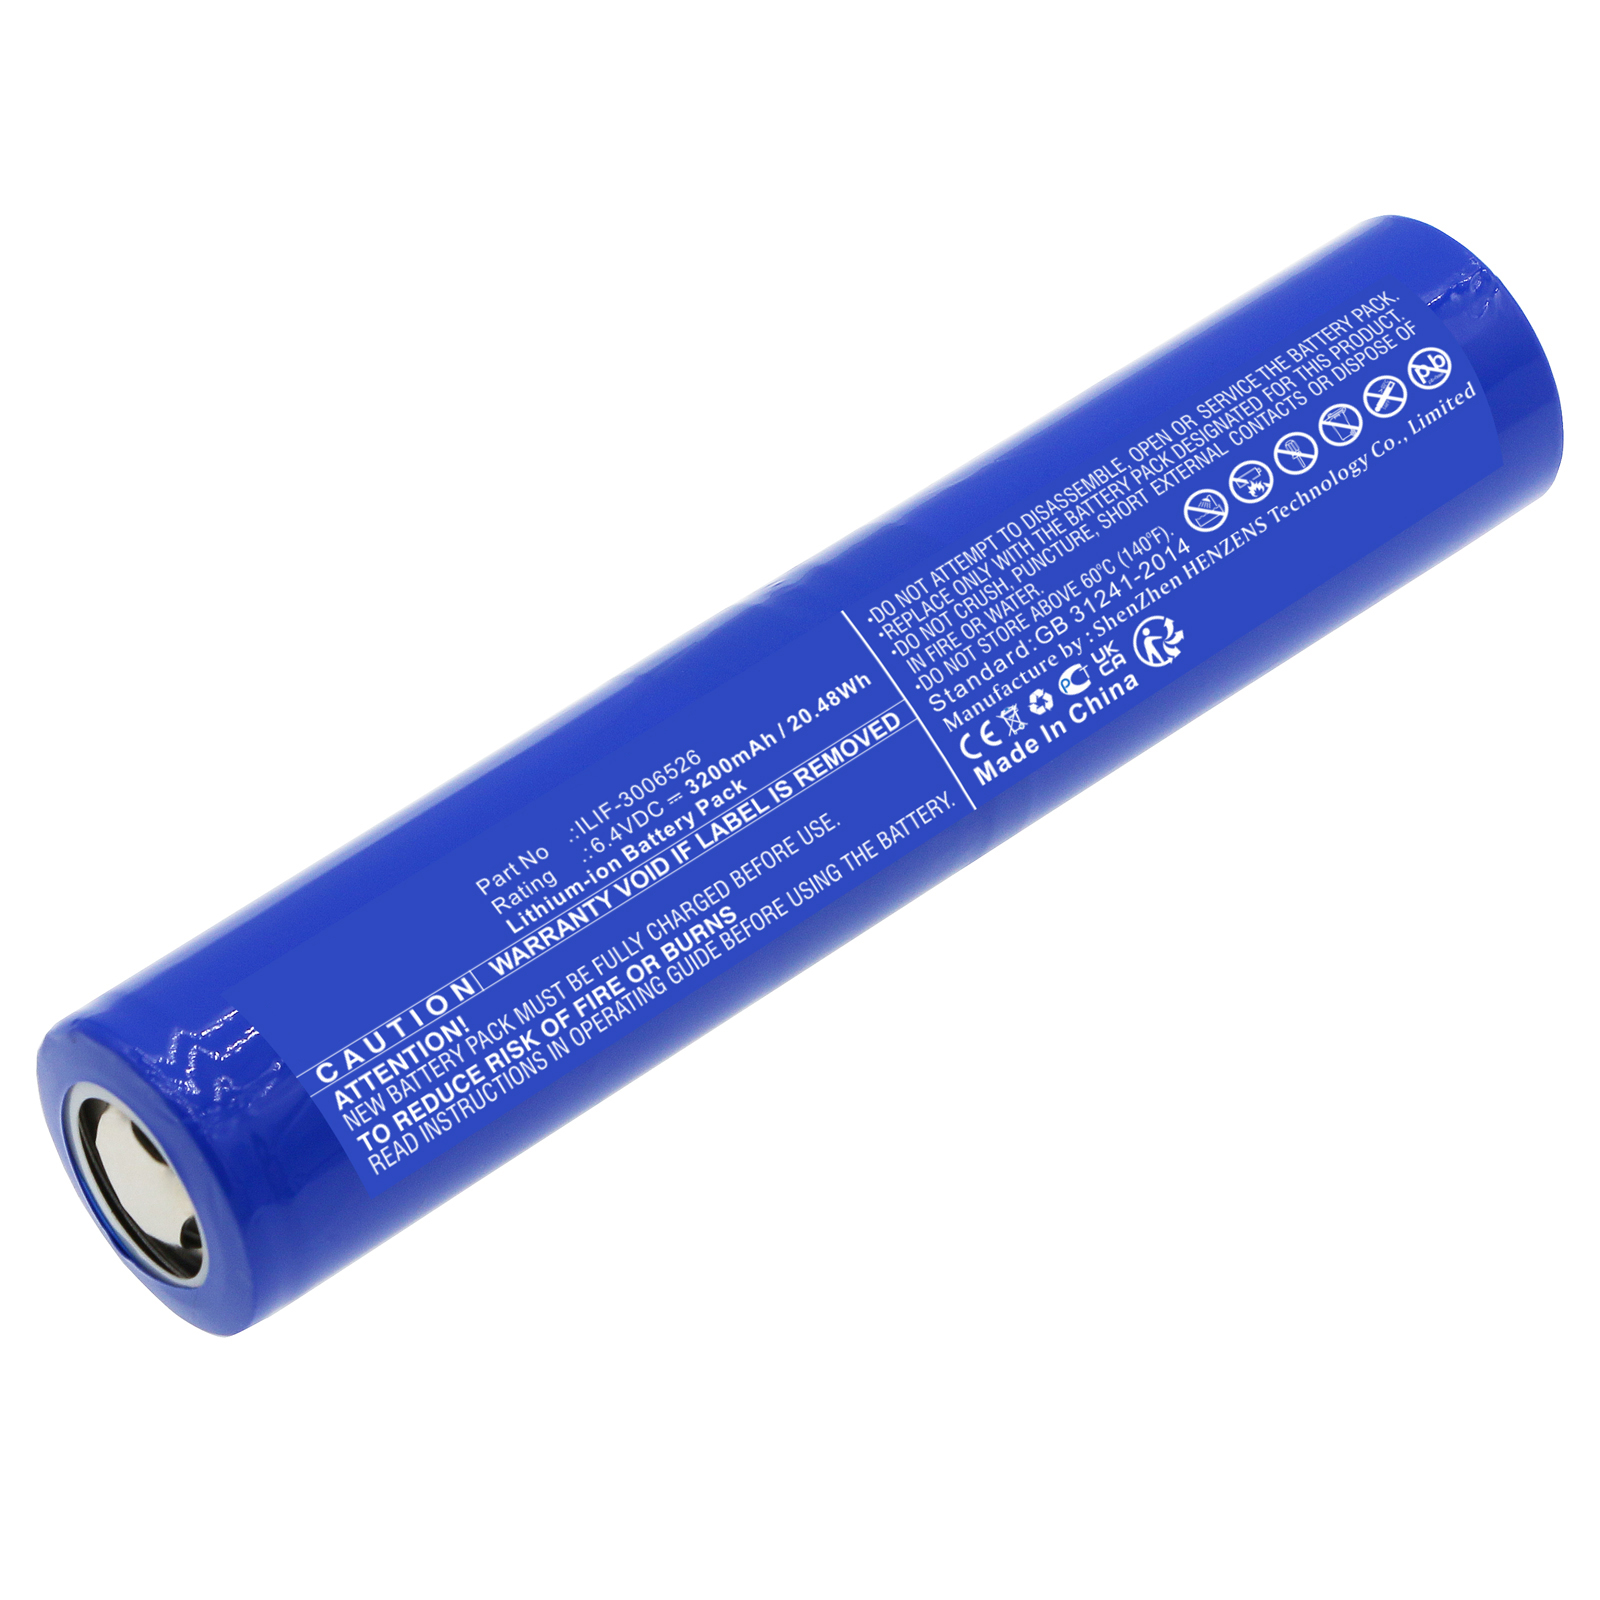 Synergy Digital Flashlight Battery, Compatible with Maglite ILIF-3006526 Flashlight Battery (LiFePO4, 6.4V, 3200mAh)